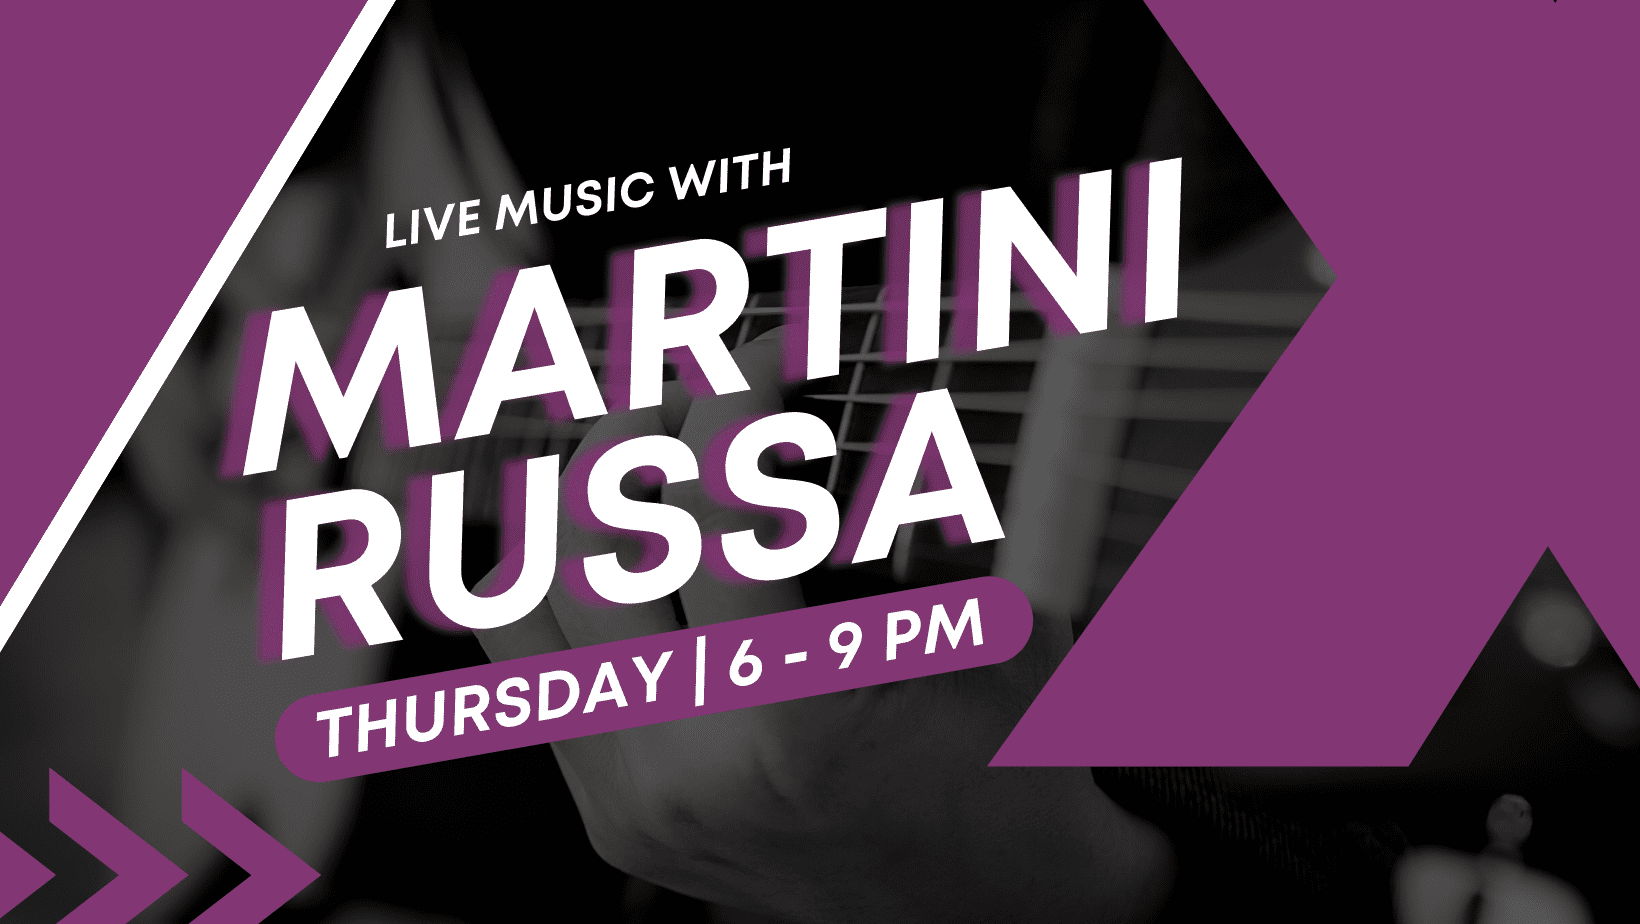 Live Music with martini russa